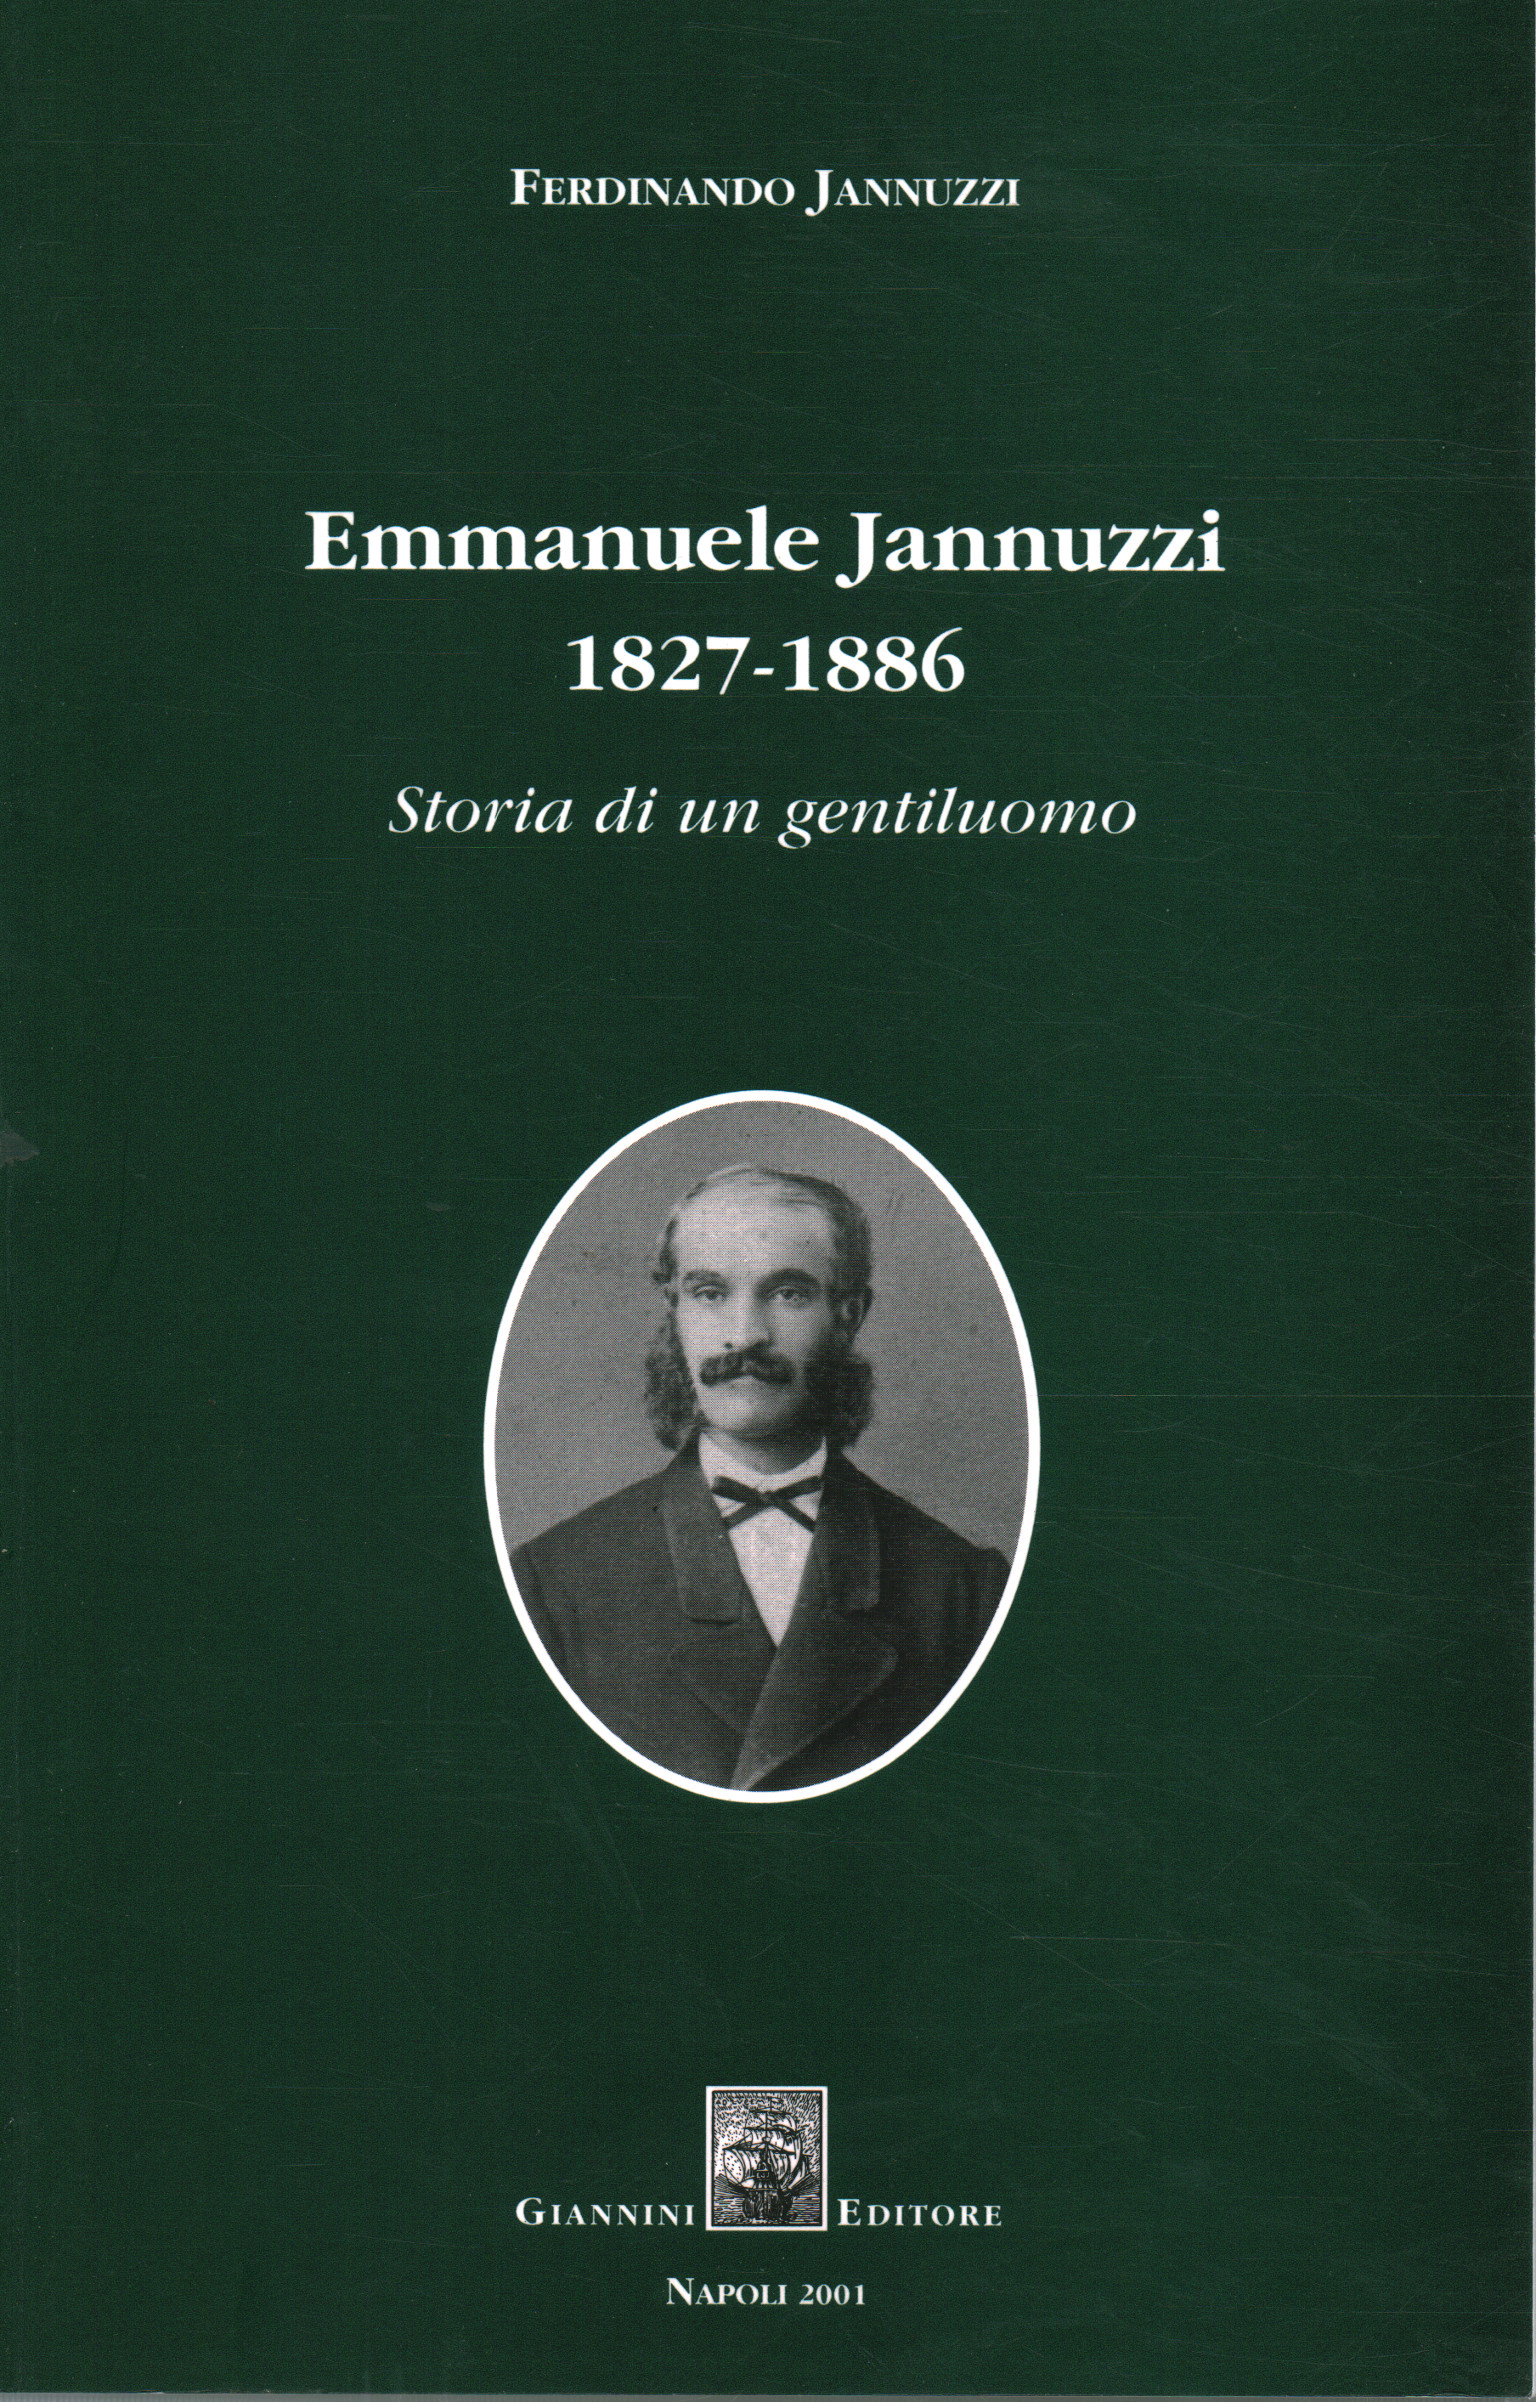 Emmanuele Jannuzzi 1827-1886, Ferdinando Jannuzzi